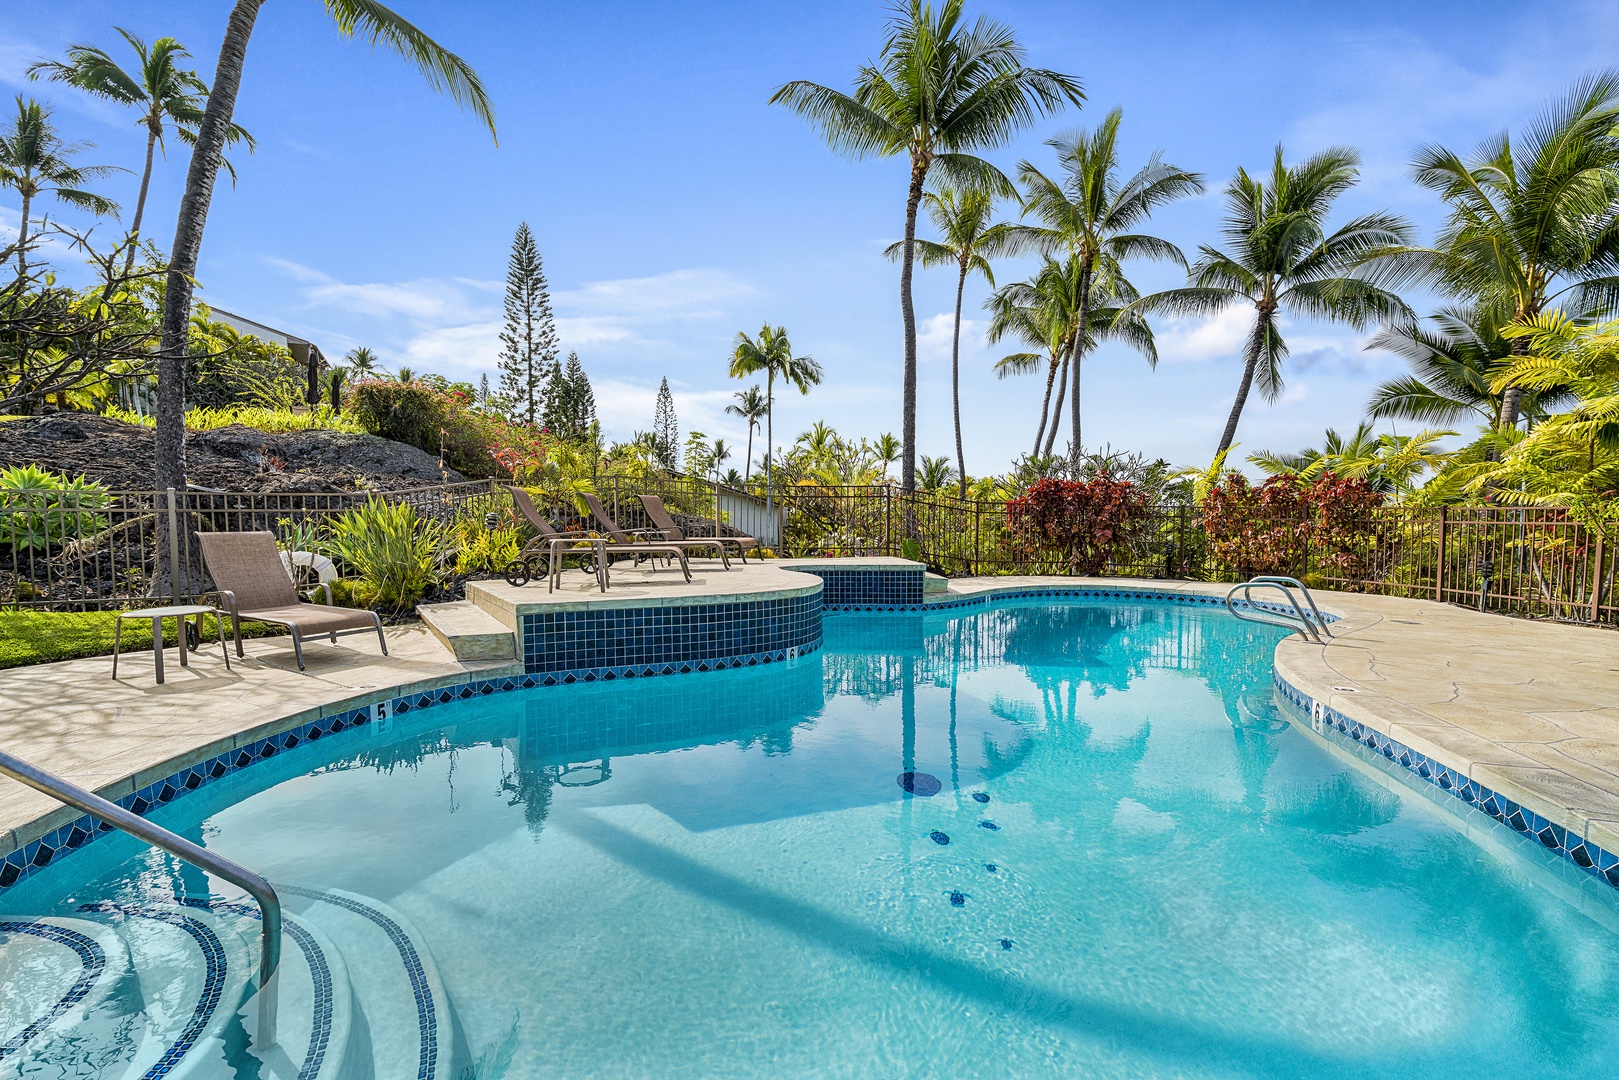 Kailua Kona Vacation Rentals, Keauhou Resort 113 - Serene pool and common area!